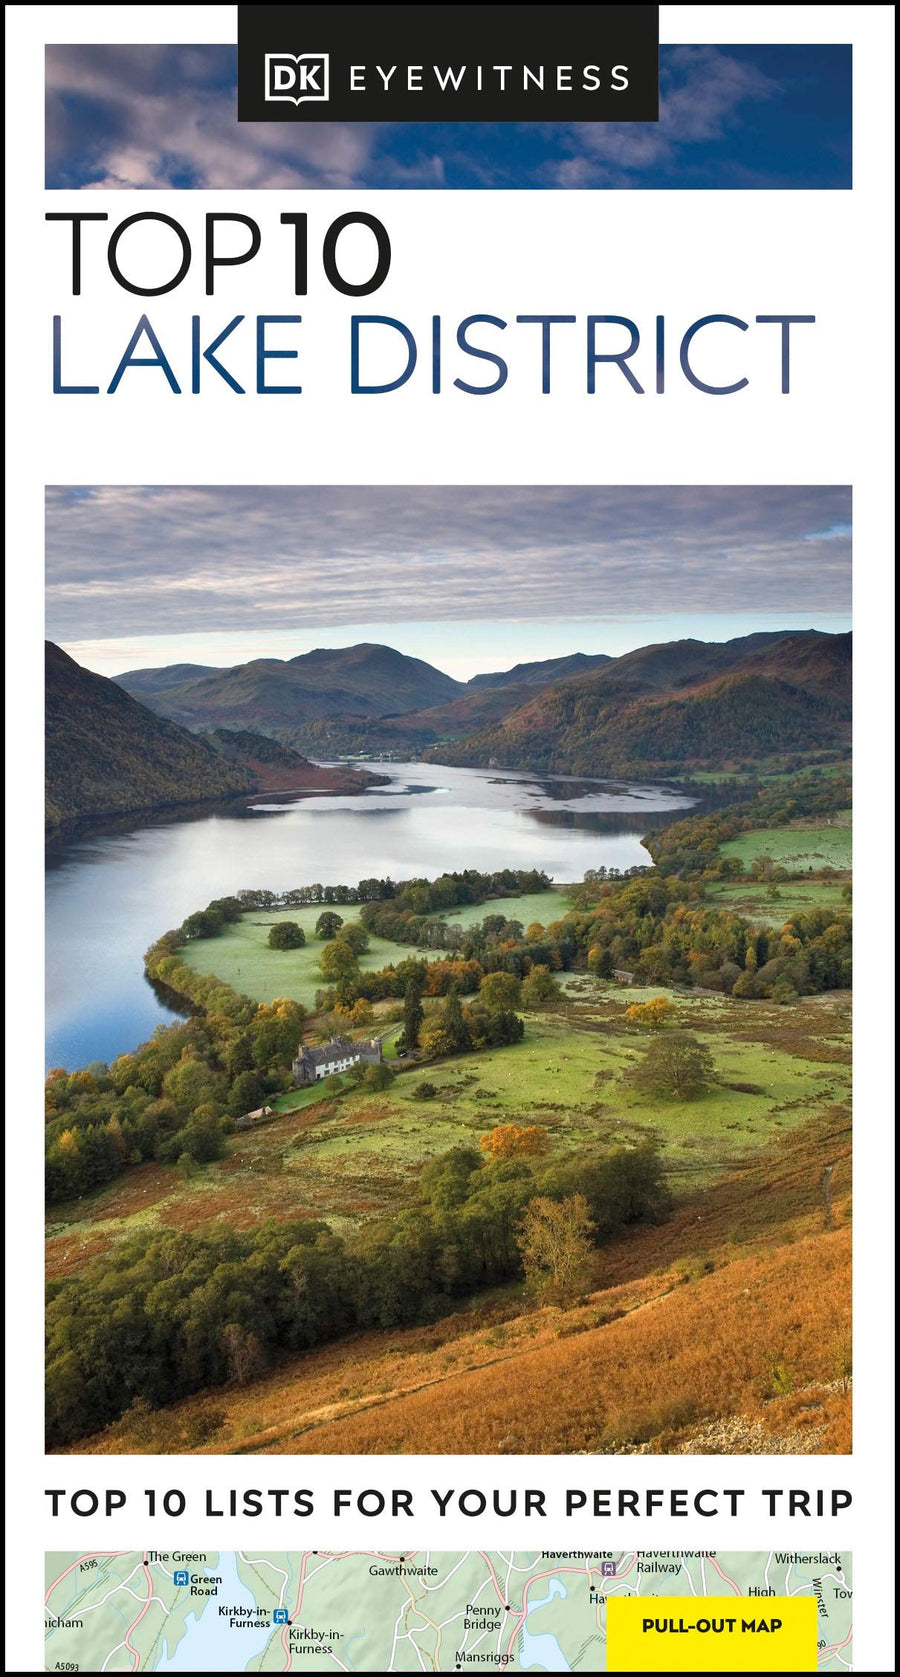 Guide de voyage (en anglais) - Lake District Top 10 | Eyewitness guide de voyage Eyewitness 